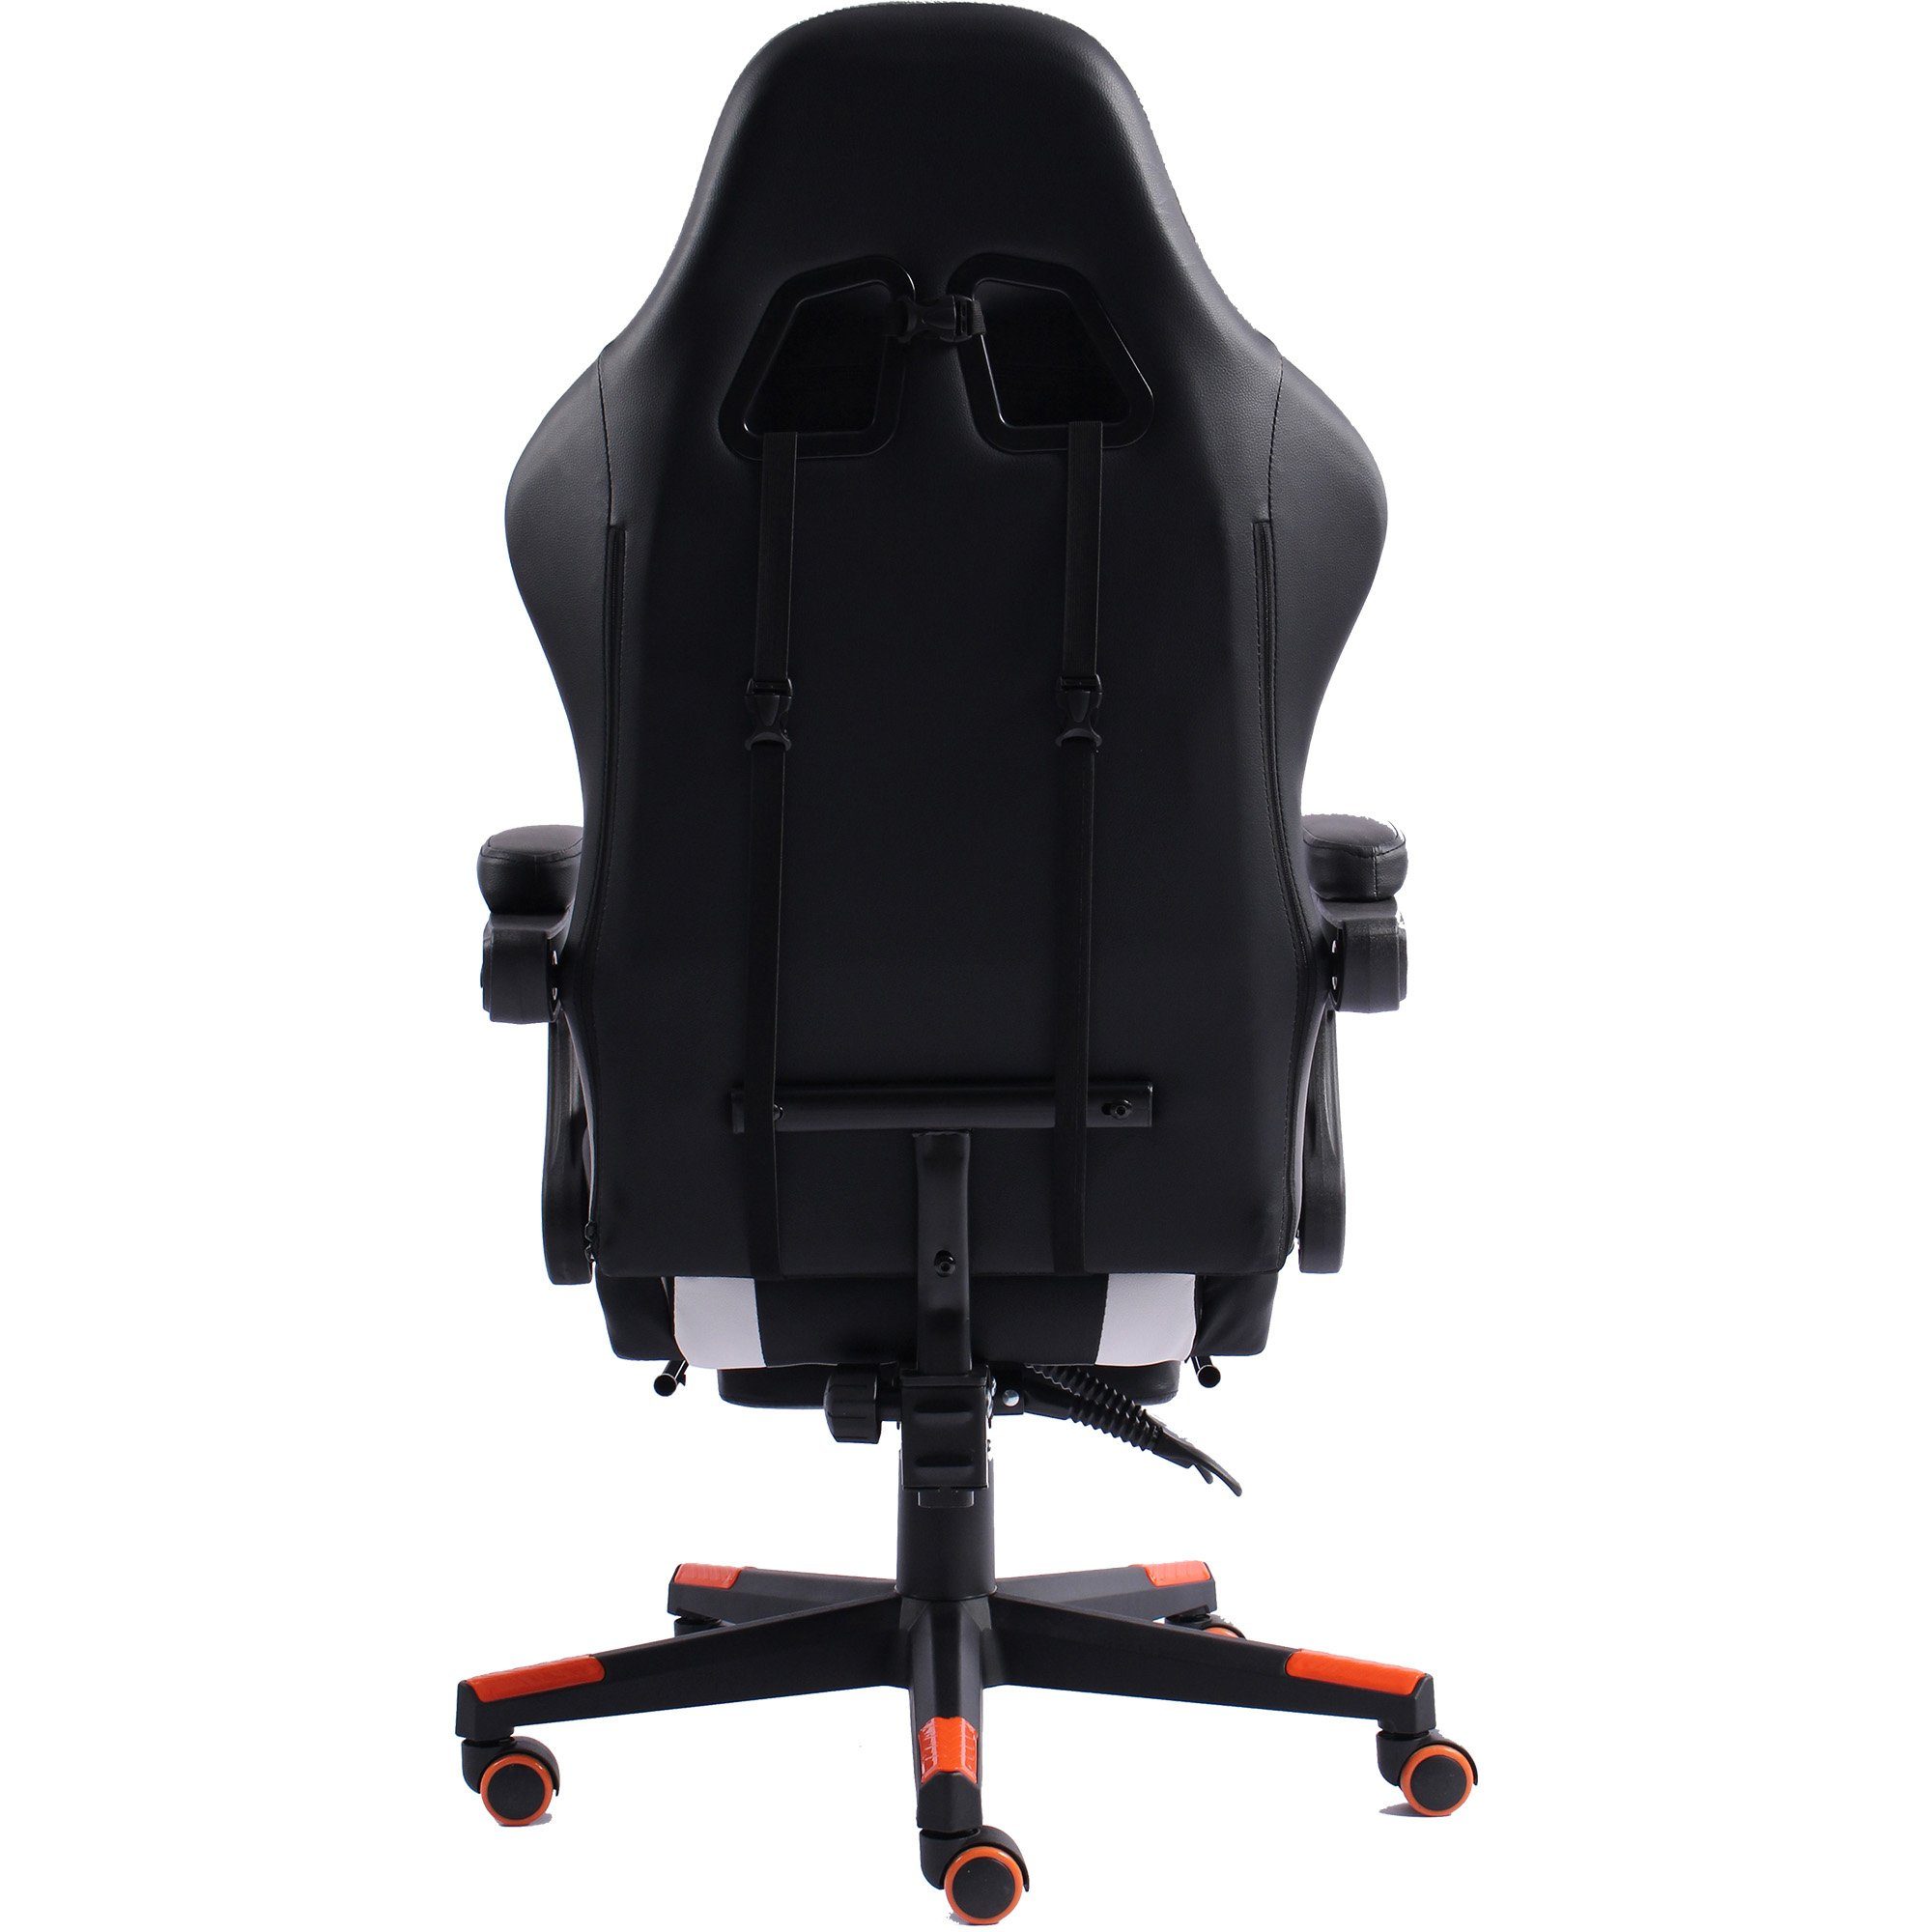 Gaming (1 TRISENS Arijus Drehstuhl Chefsessel Bürostuhl Racing-Design Fußstütze Stück), im Schwarz/Weiß-Orange mit Stuhl